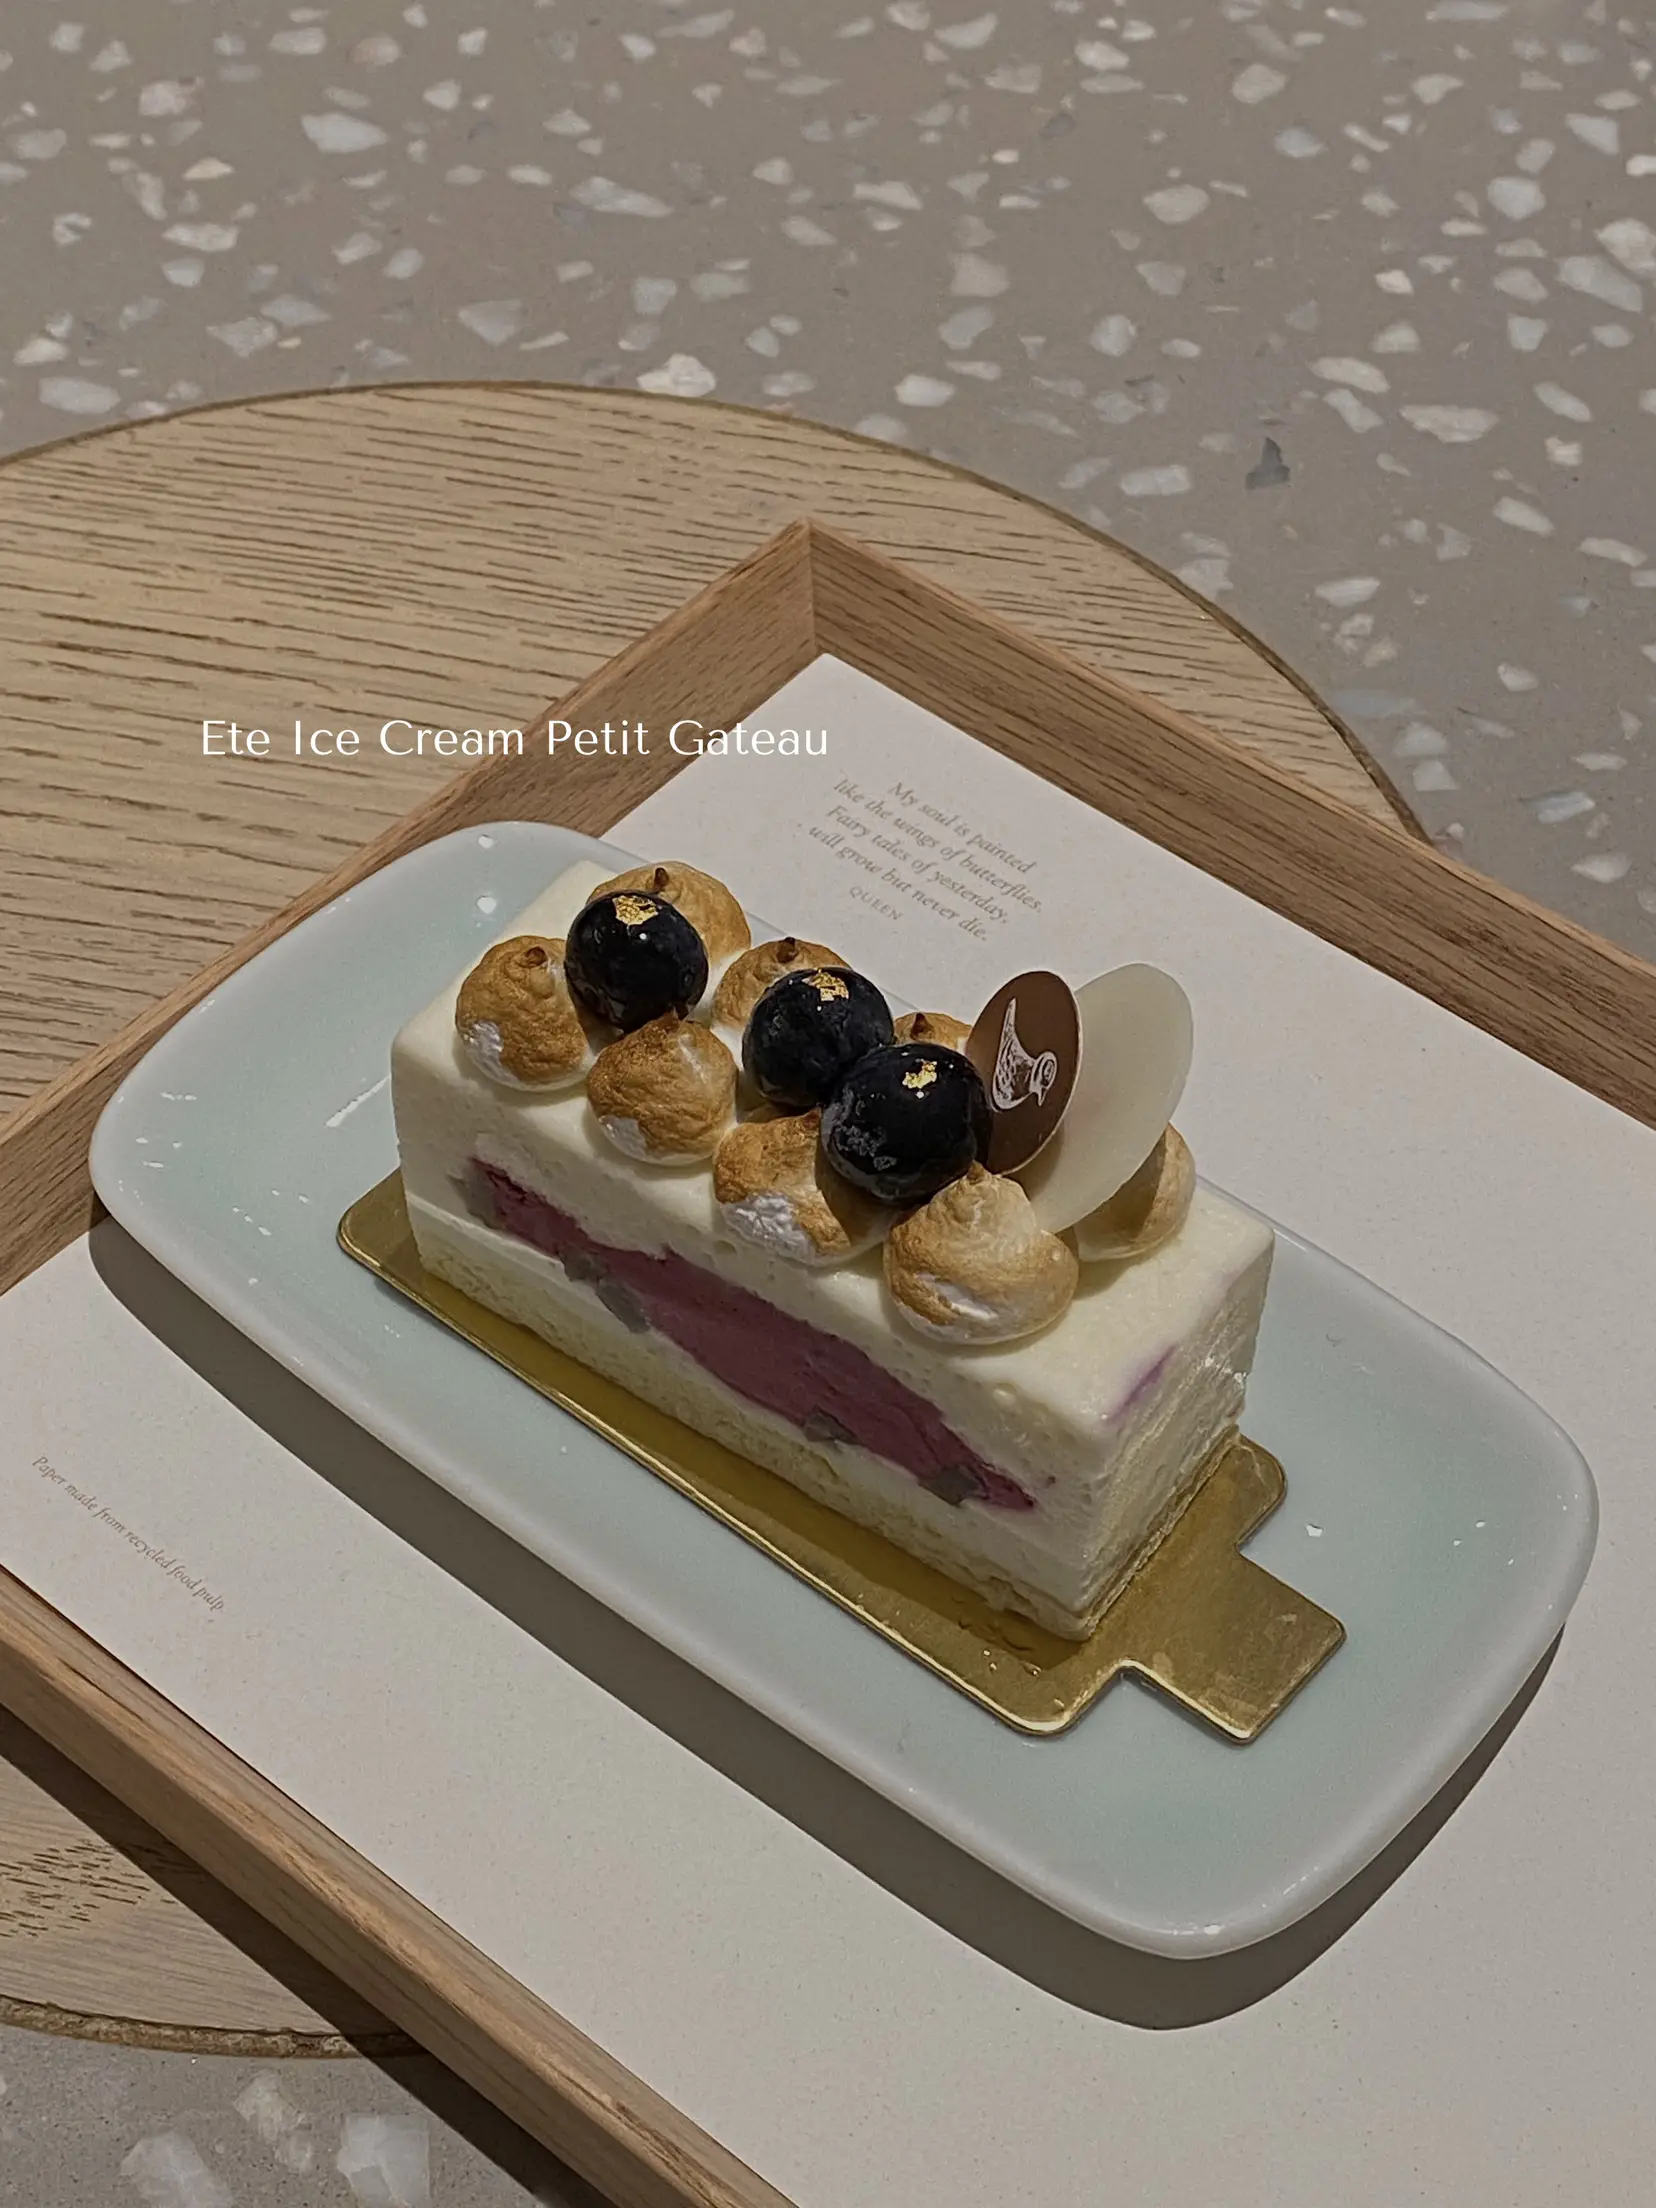 Dessert Cafes in Singapore - Lemon8 Search